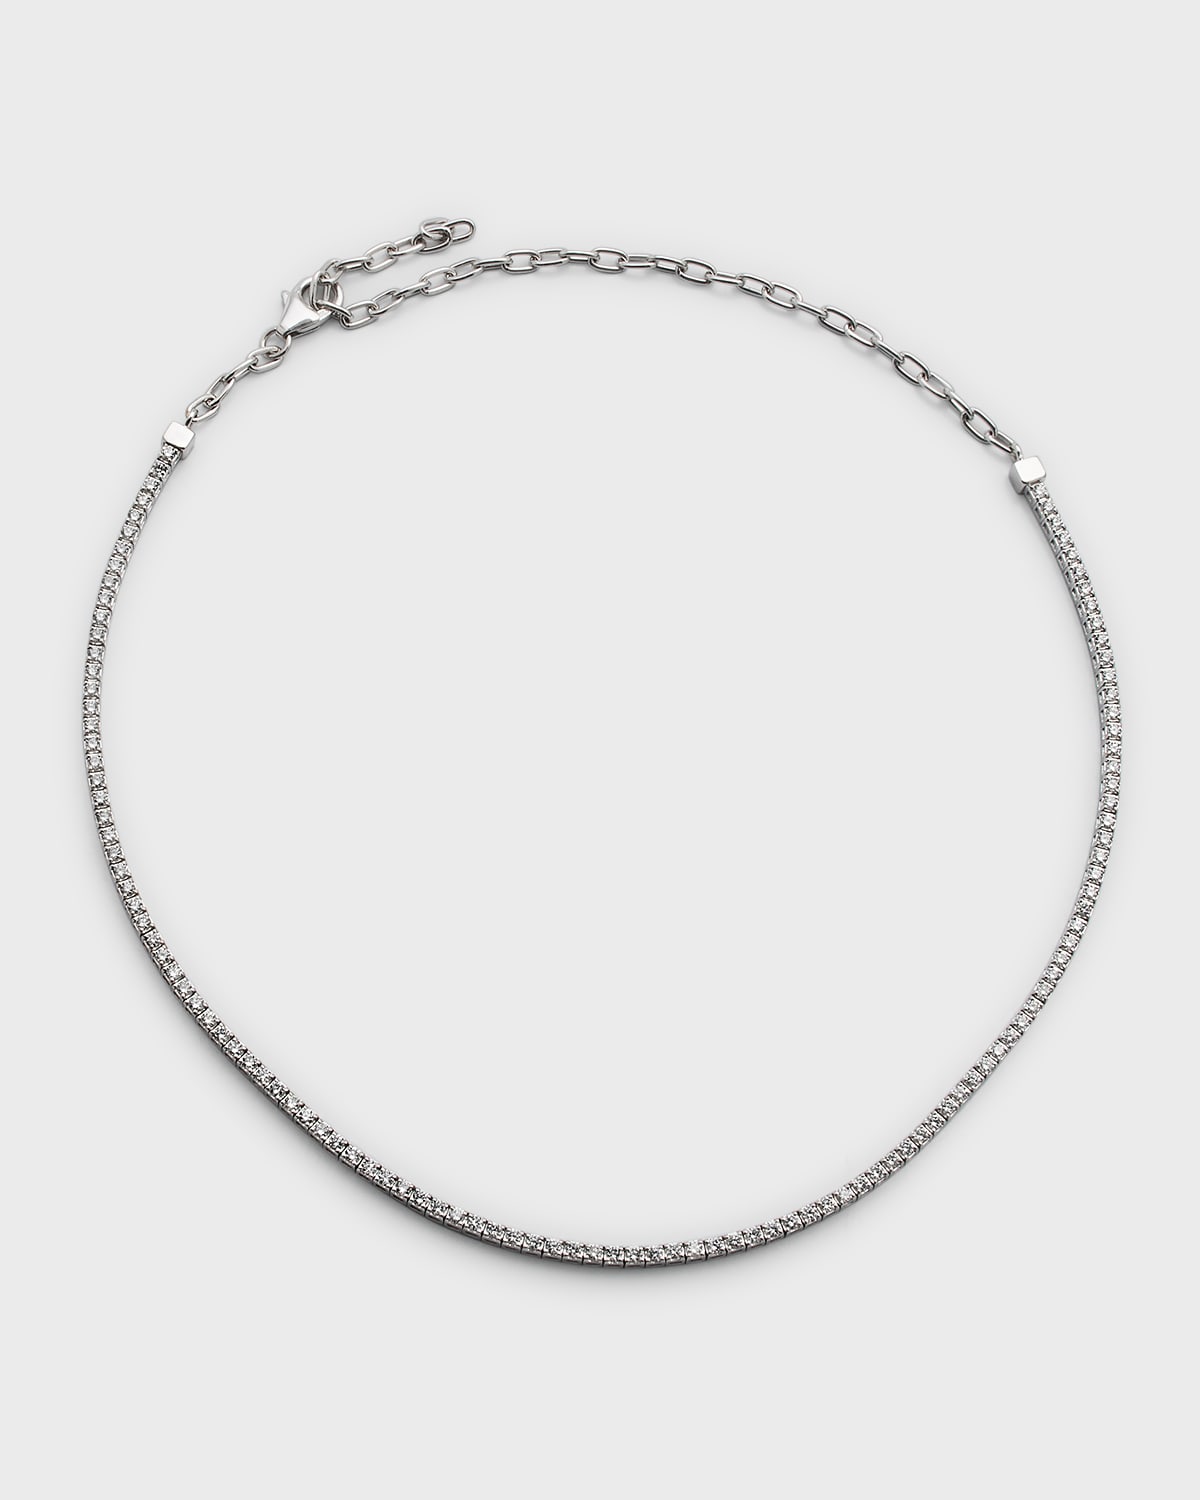 NM Diamond Collection White Gold Half-Diamond Half-Chain Necklace